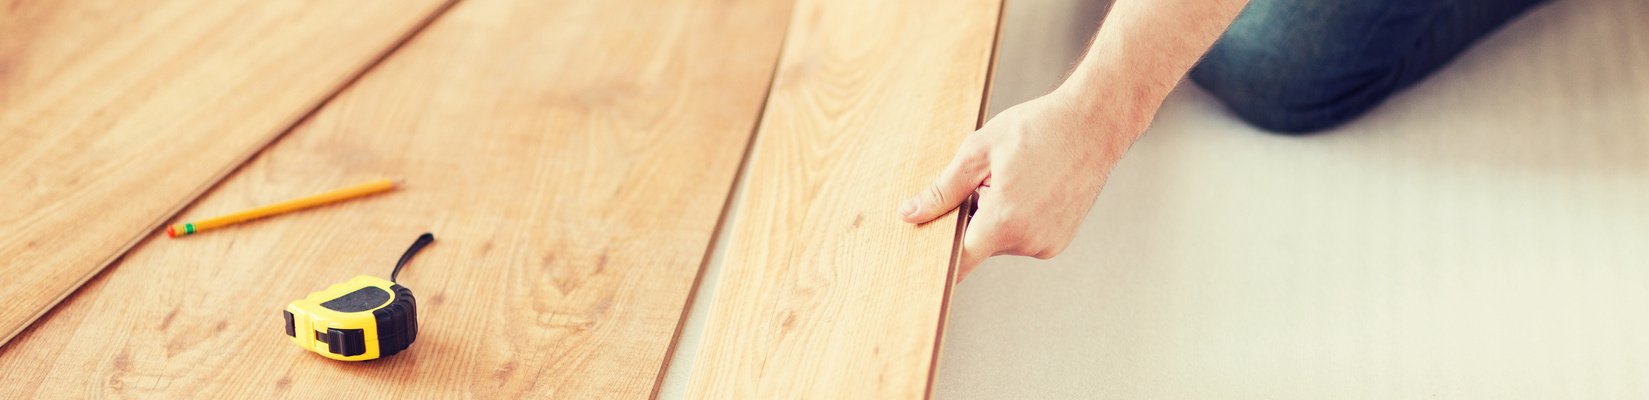 Does Luxury Vinyl Plank Flooring Require Underlayment? - Flooring